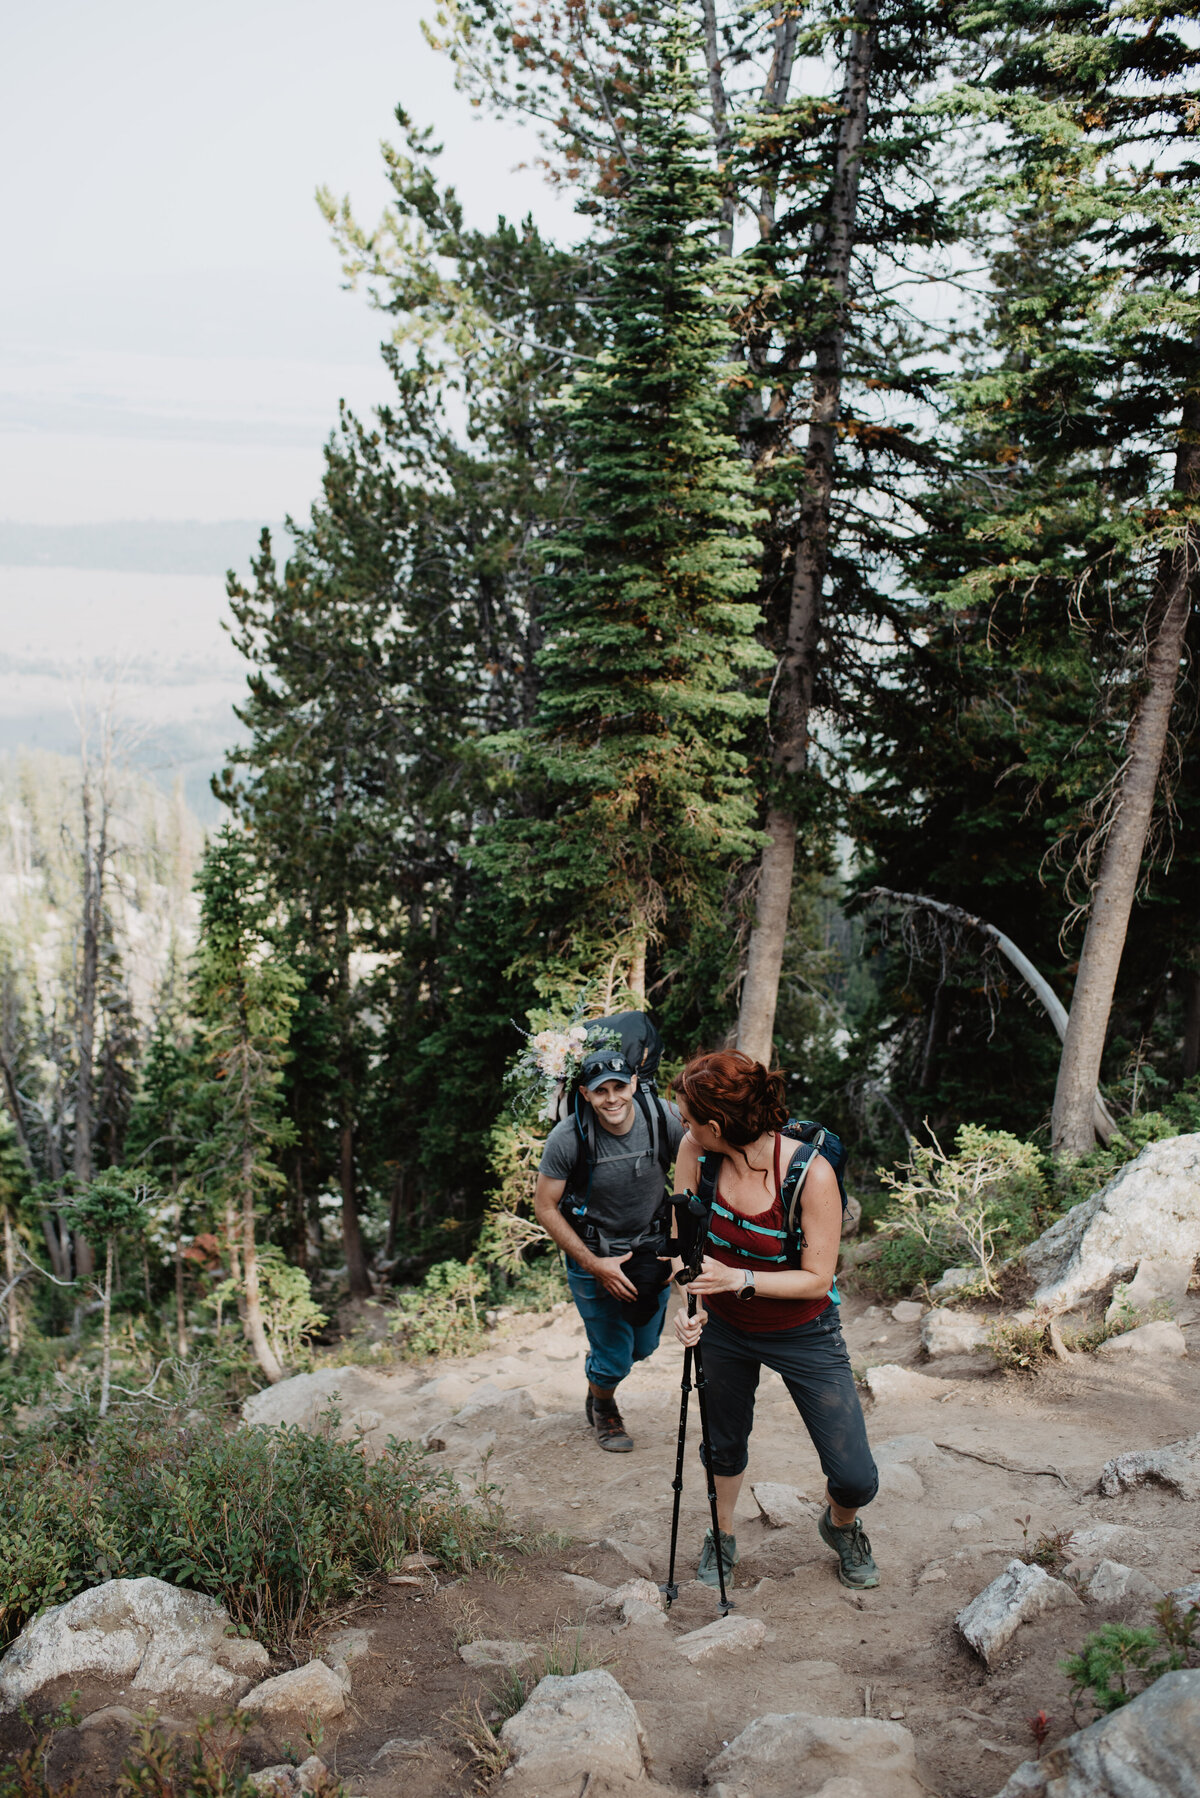 Jackson Hole photographers capture man and woman hiking together